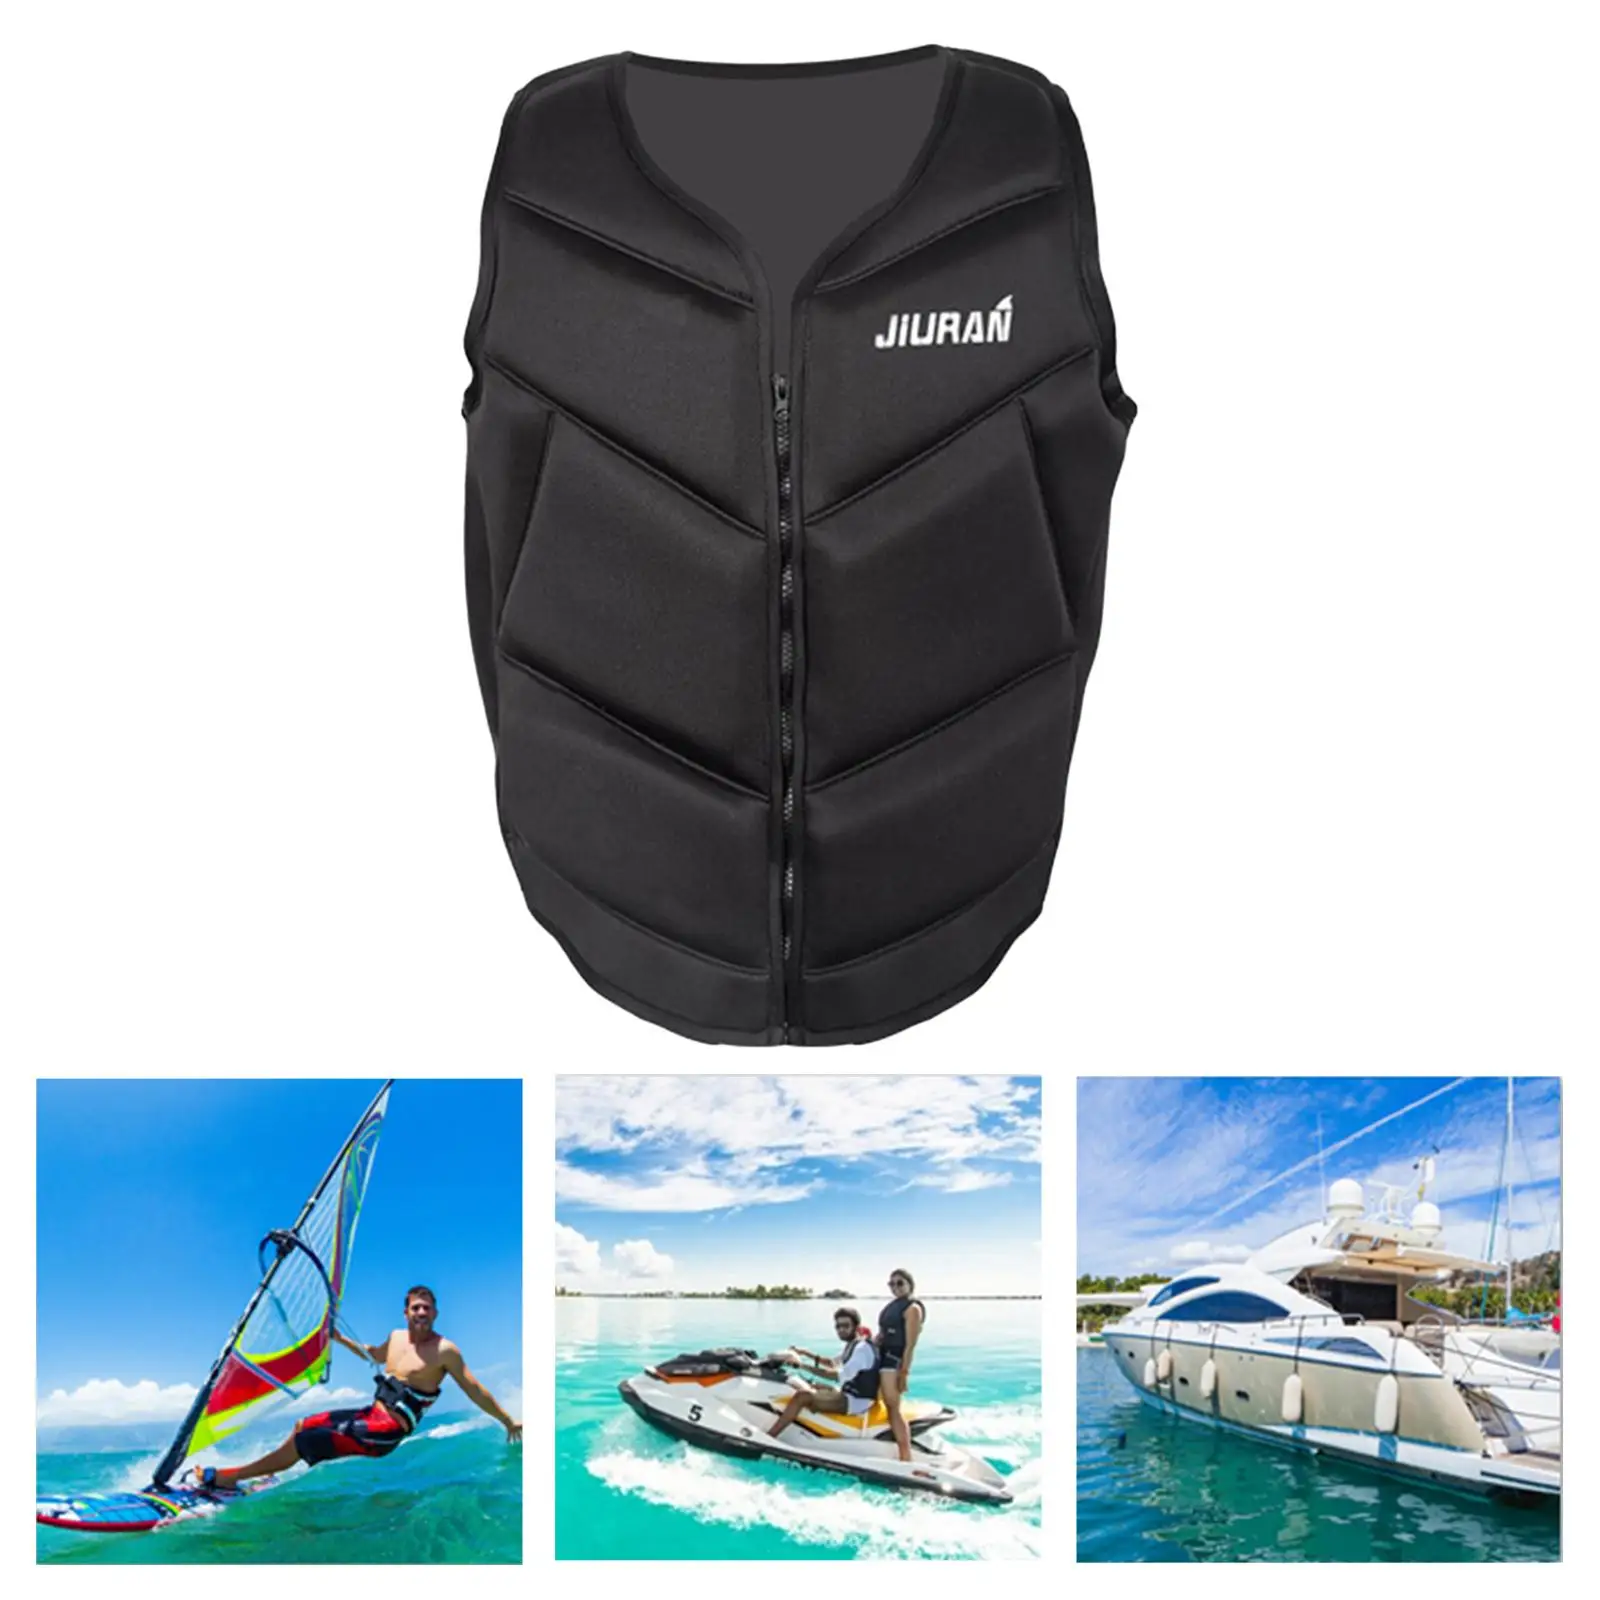 Unisex Adult Life Jacket Zipper Vest Buoyancy Aid Water Jacket Boating Vest Breathable Waistcoat for Drifting Swimming Sailing